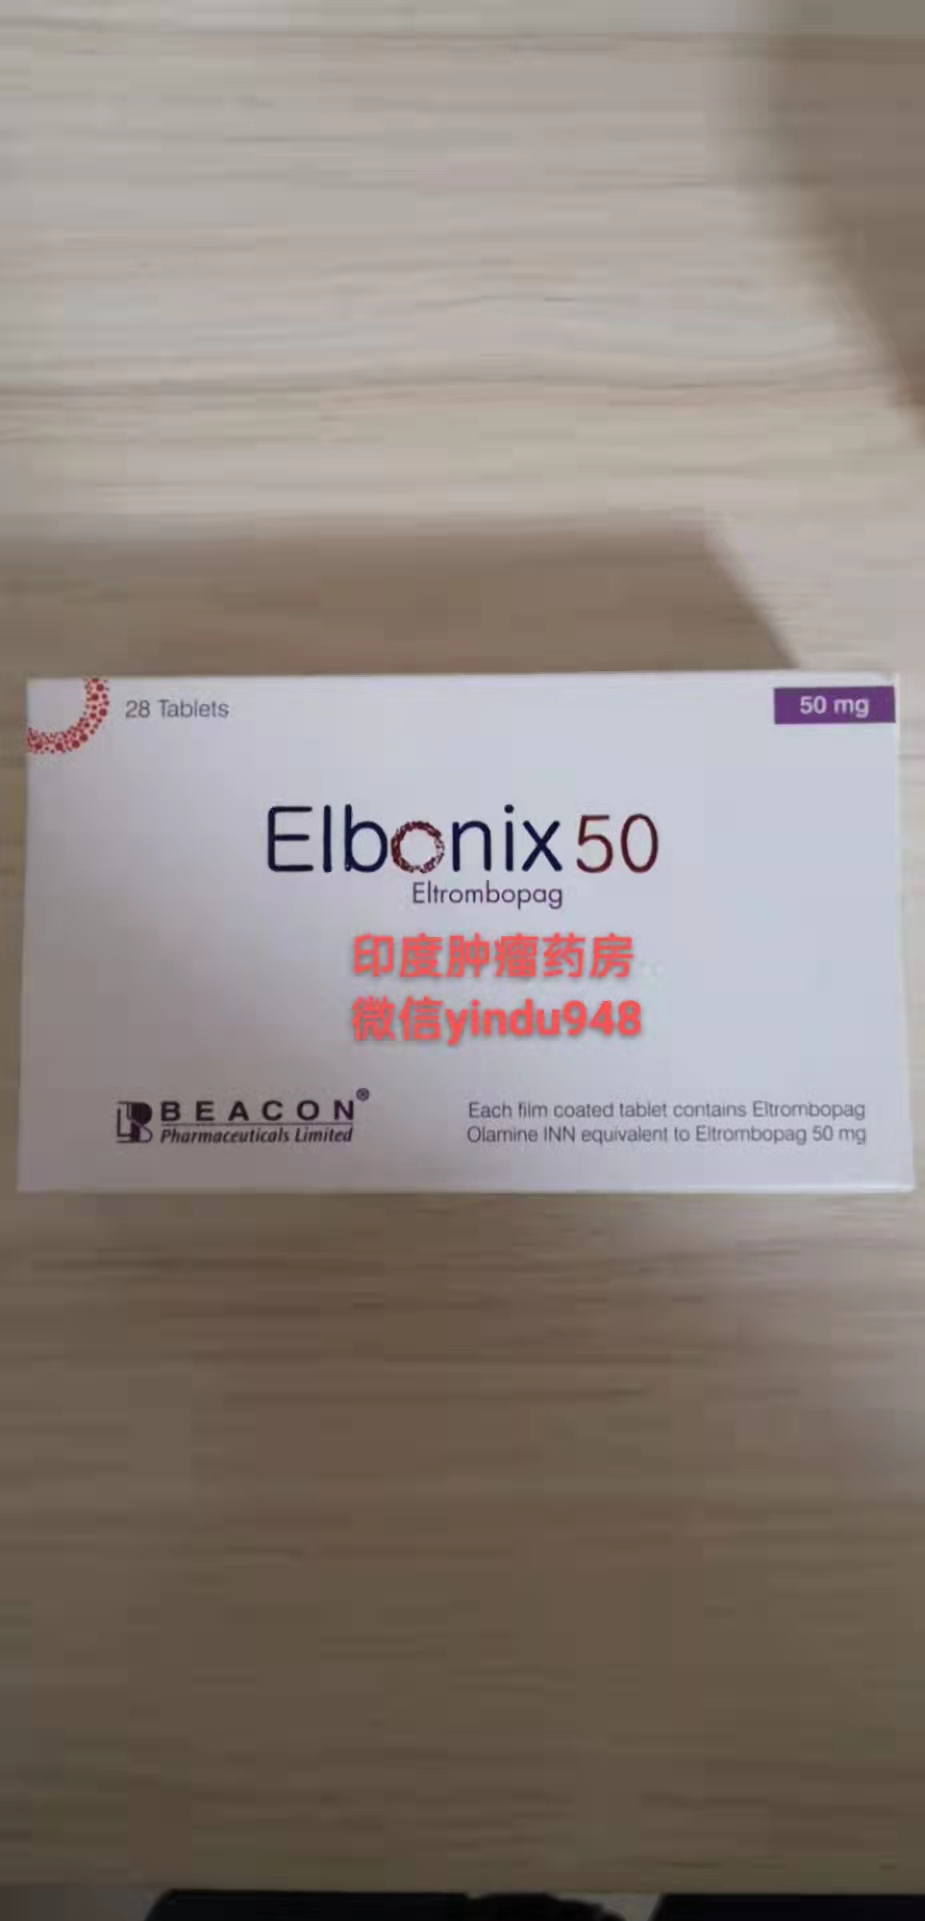 Elbonix50艾曲泊帕/eltrombopag（艾曲波帕/50mg*28）